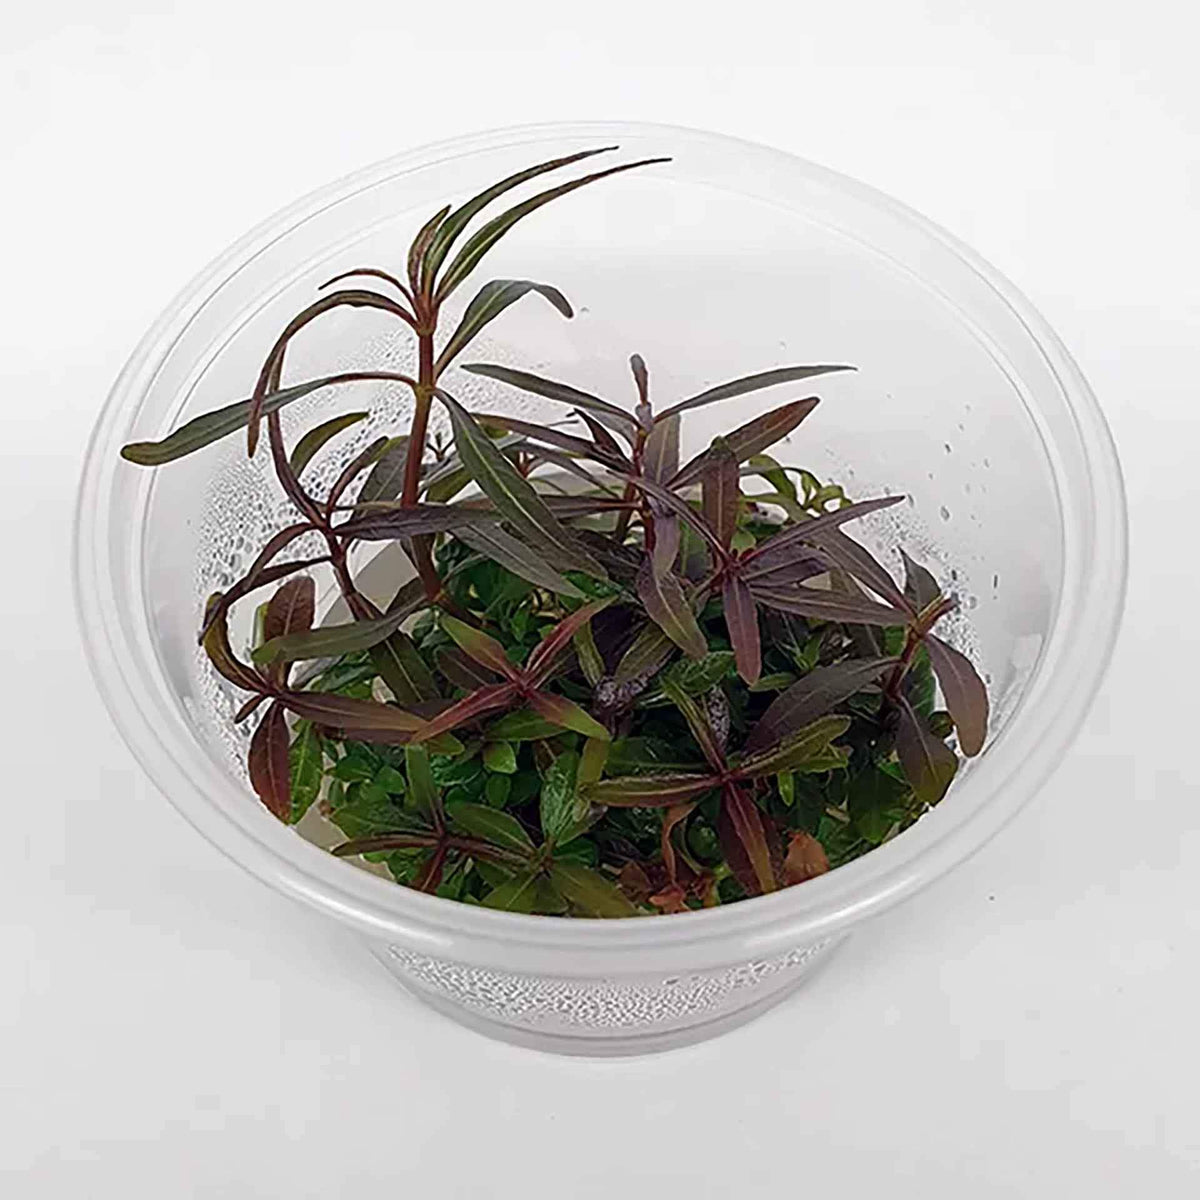 Hygrophila lancea ‘Araguaia’ Live Plant - Tissue Culture